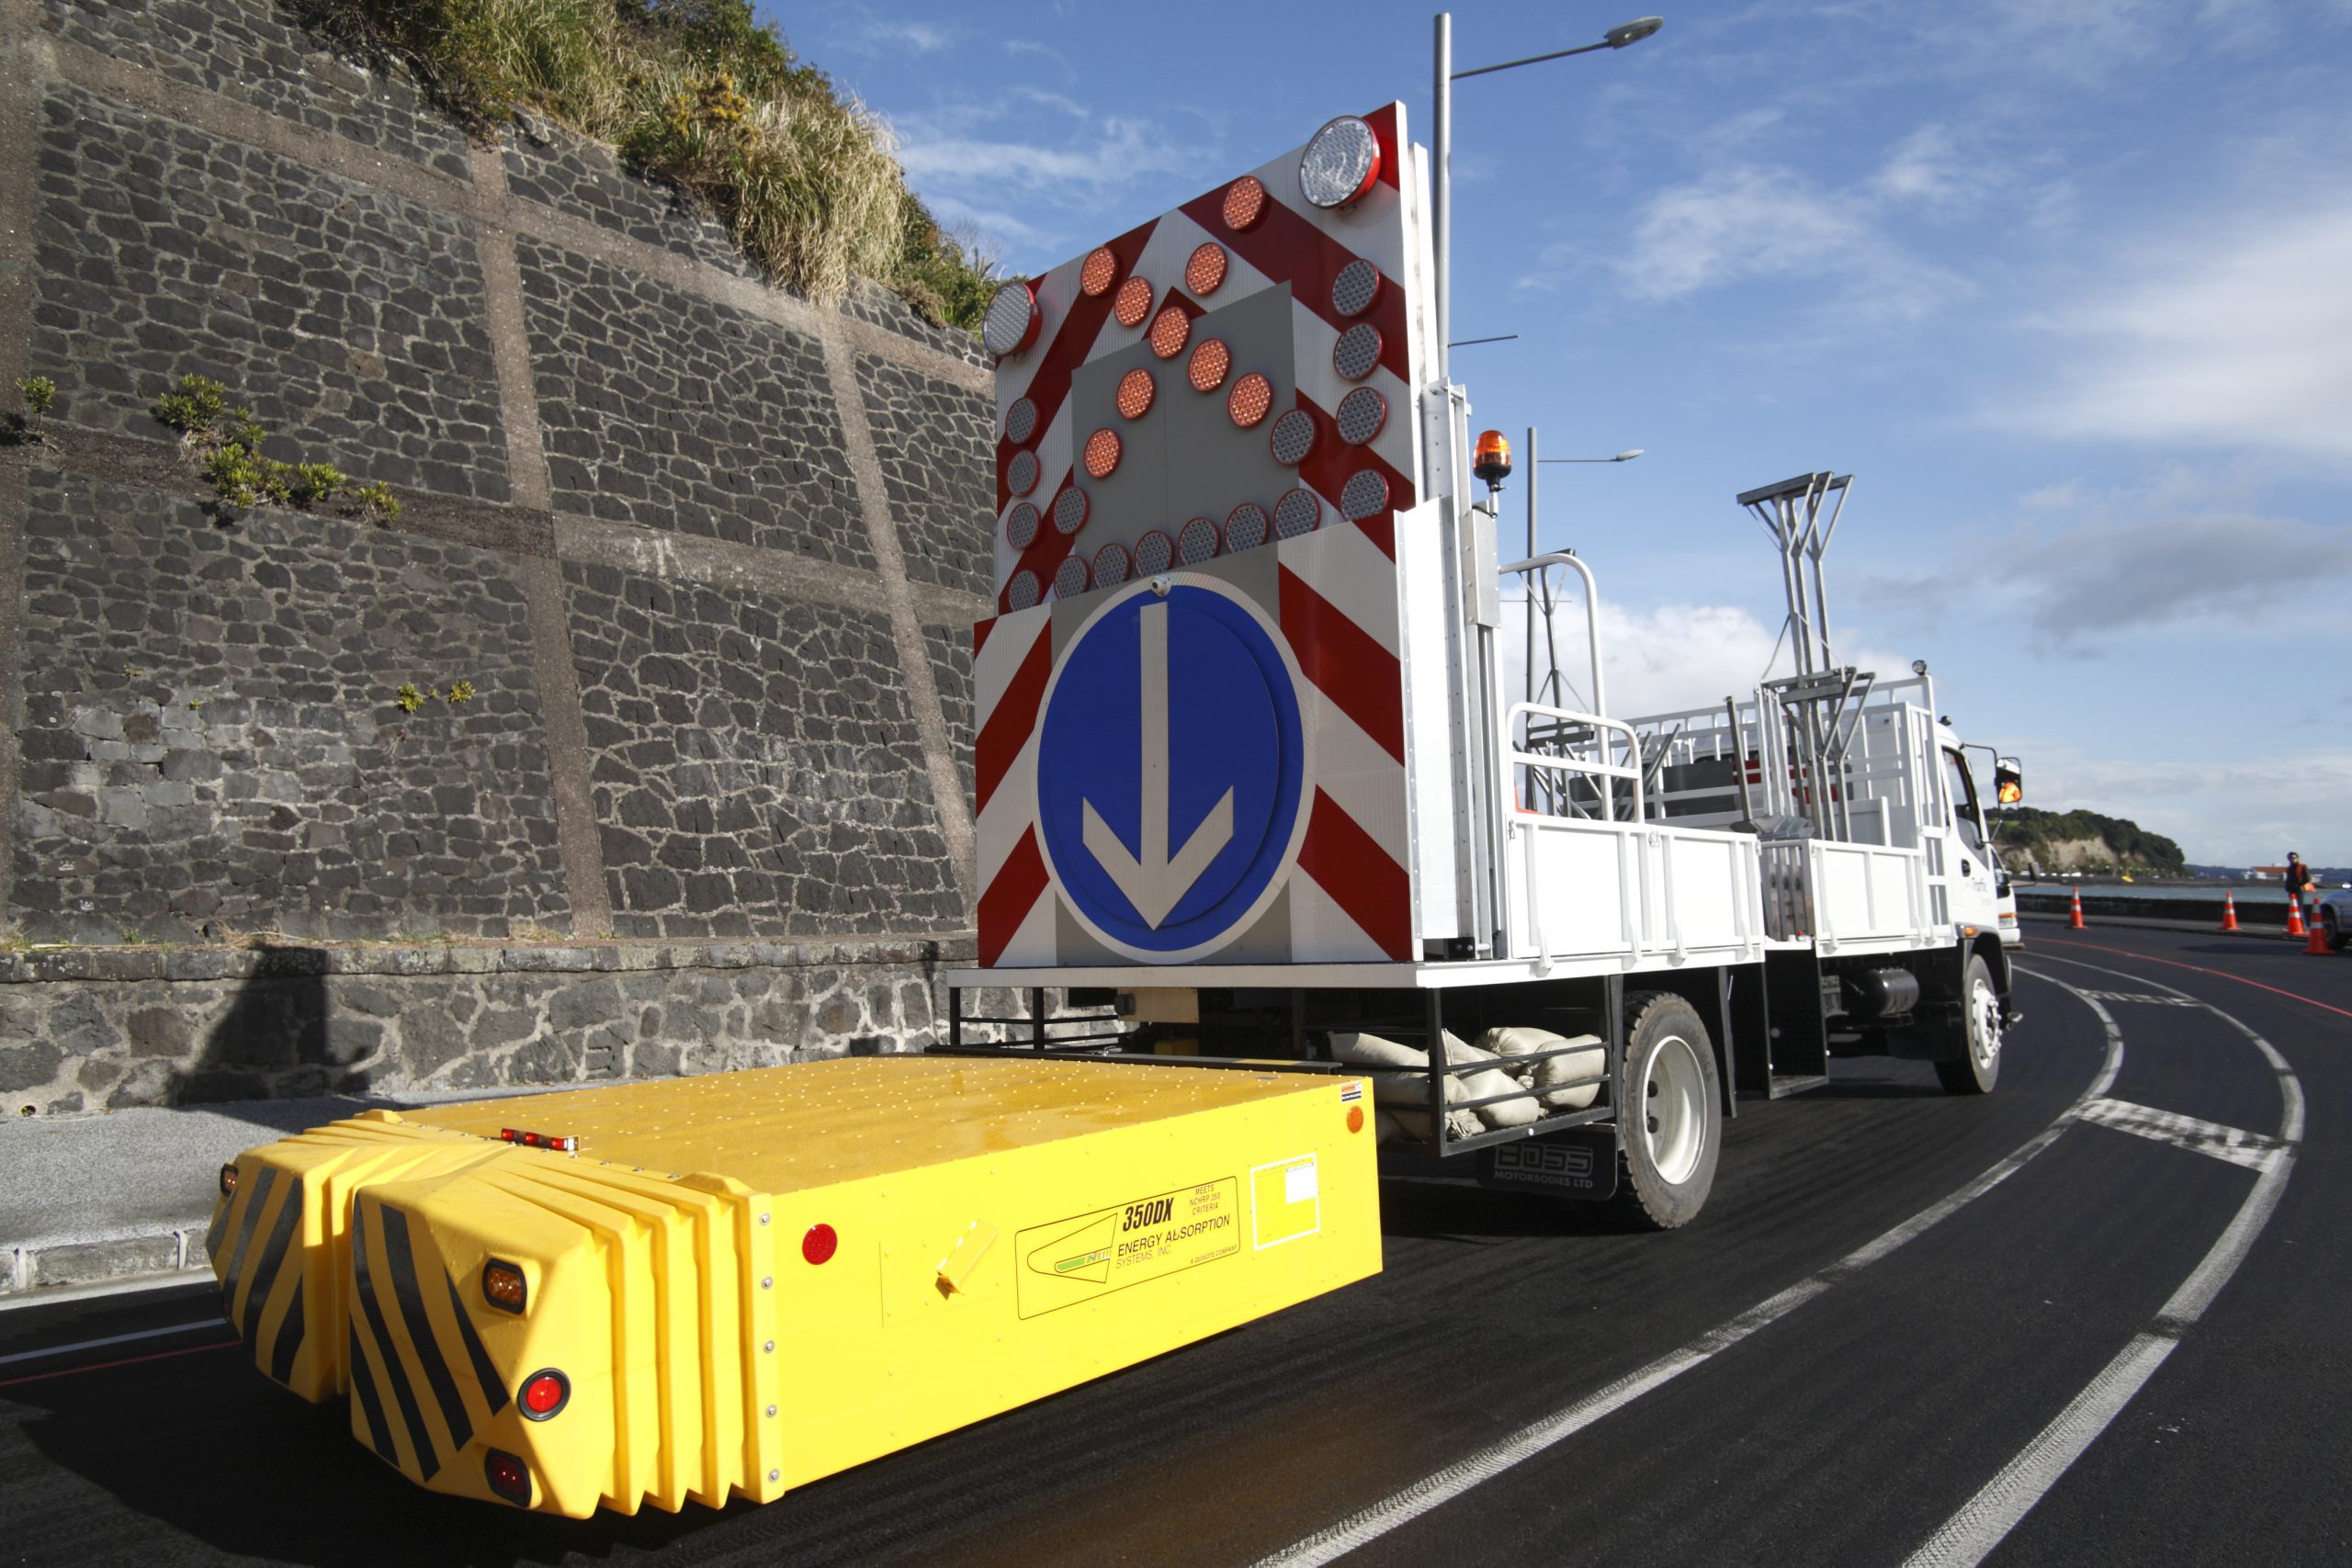 Traffic management equipment on Auckland road